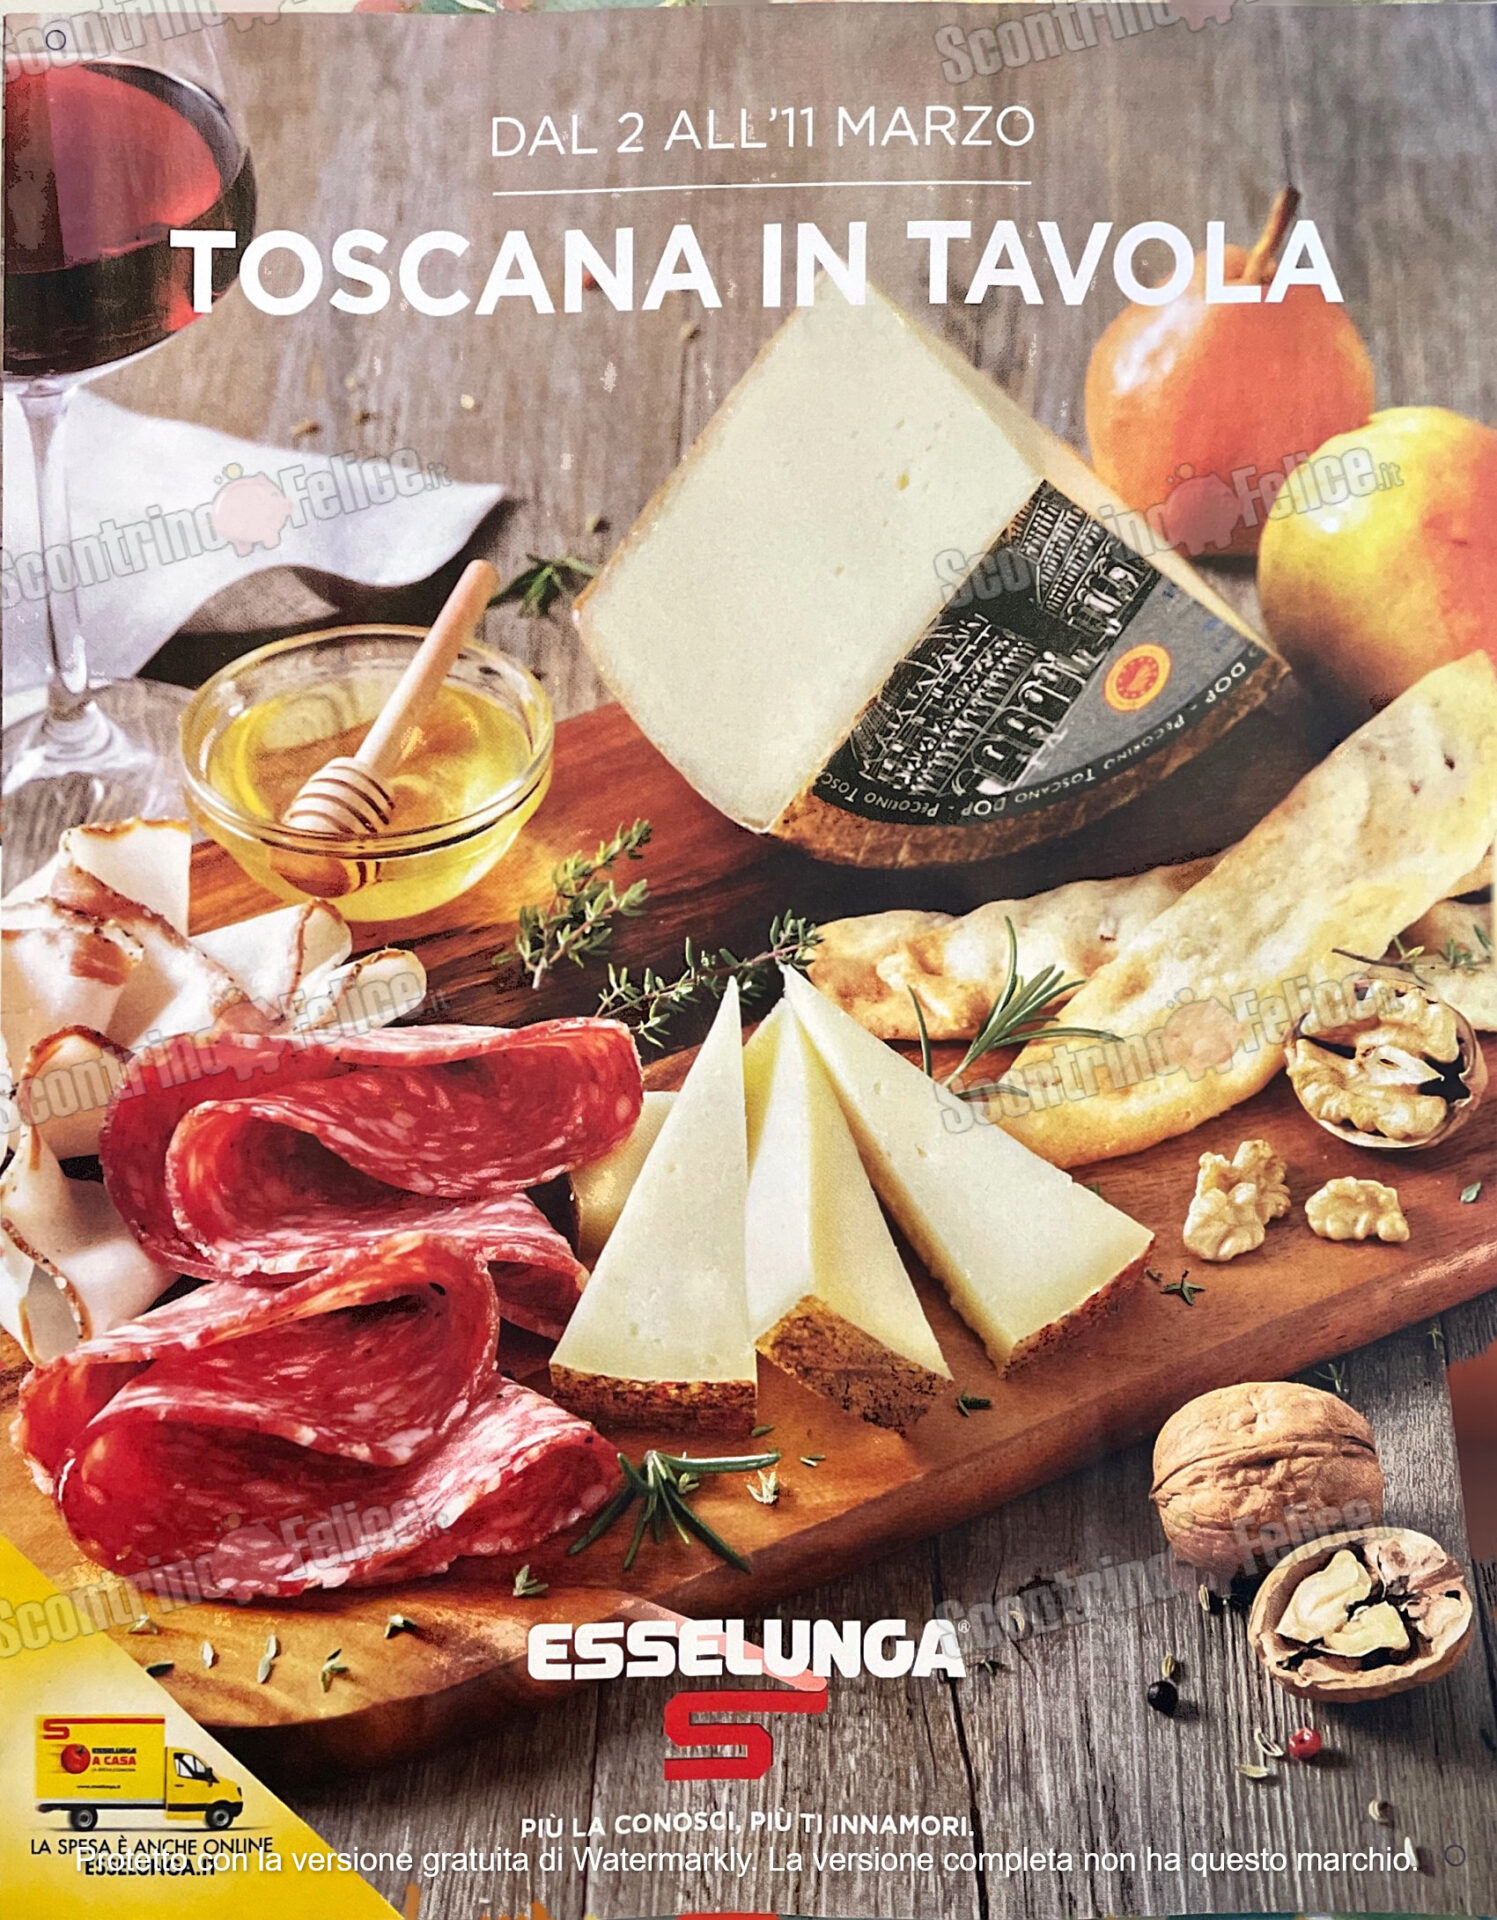 Anteprima Volantino Esselunga "Toscana in tavola" valido dal 2 all'11 marzo 2023 1